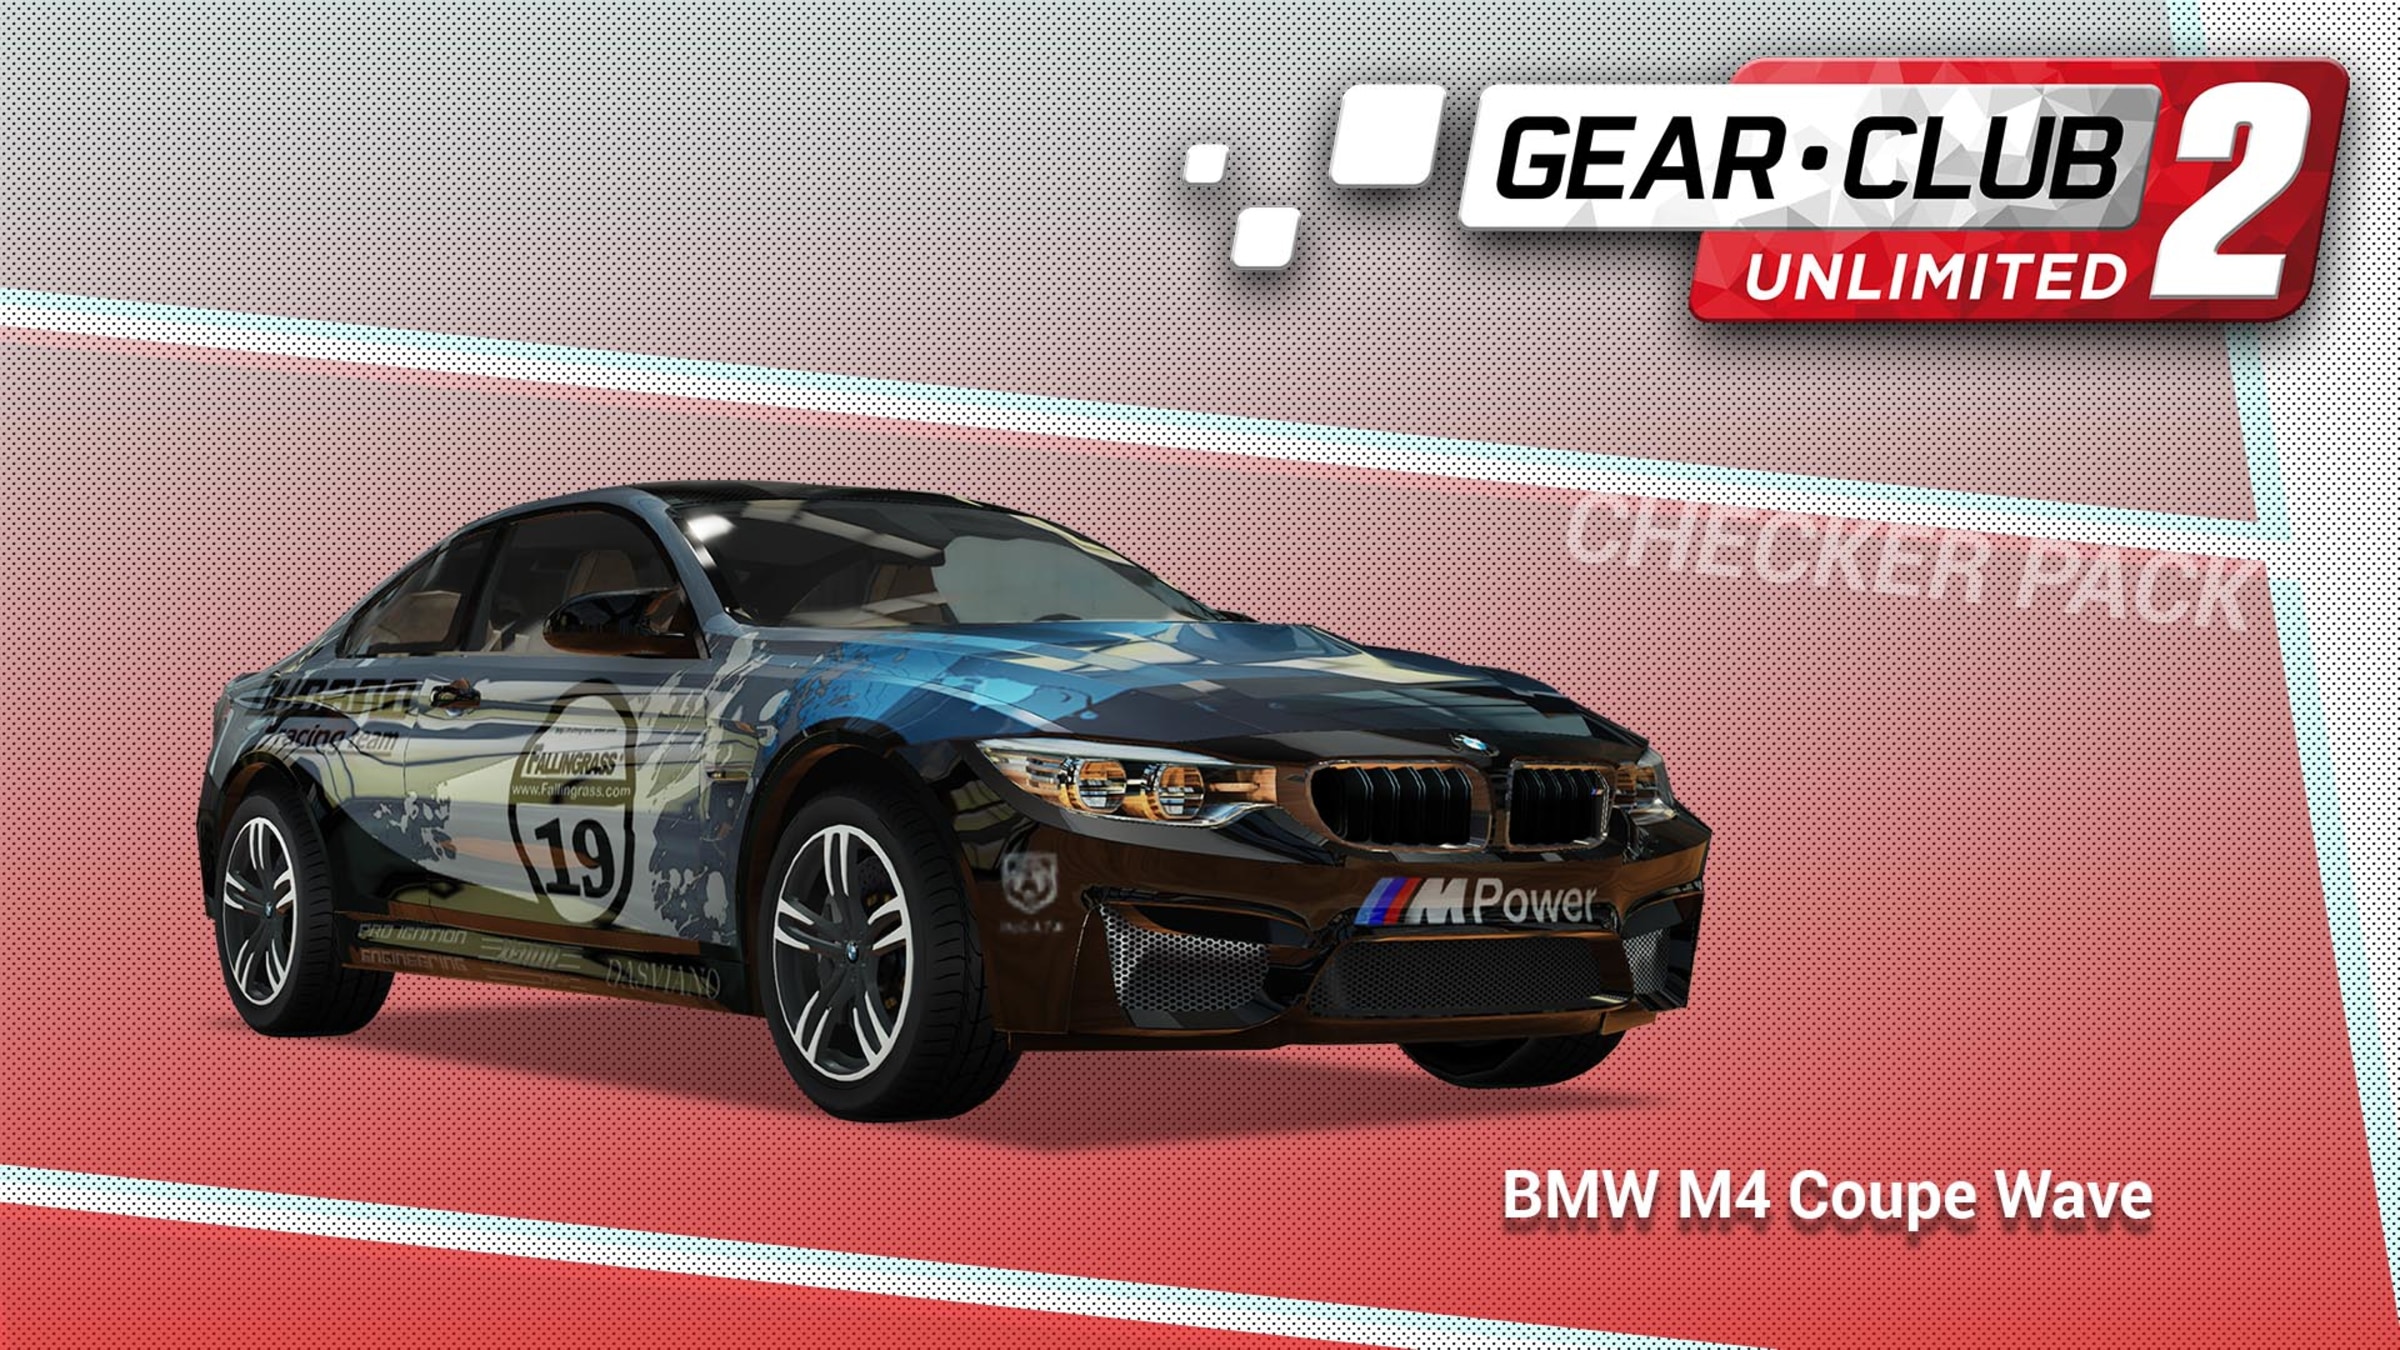 BMW M4 Coupe Wave  Unlimited 2 para Nintendo Switch - Sitio  oficial de Nintendo